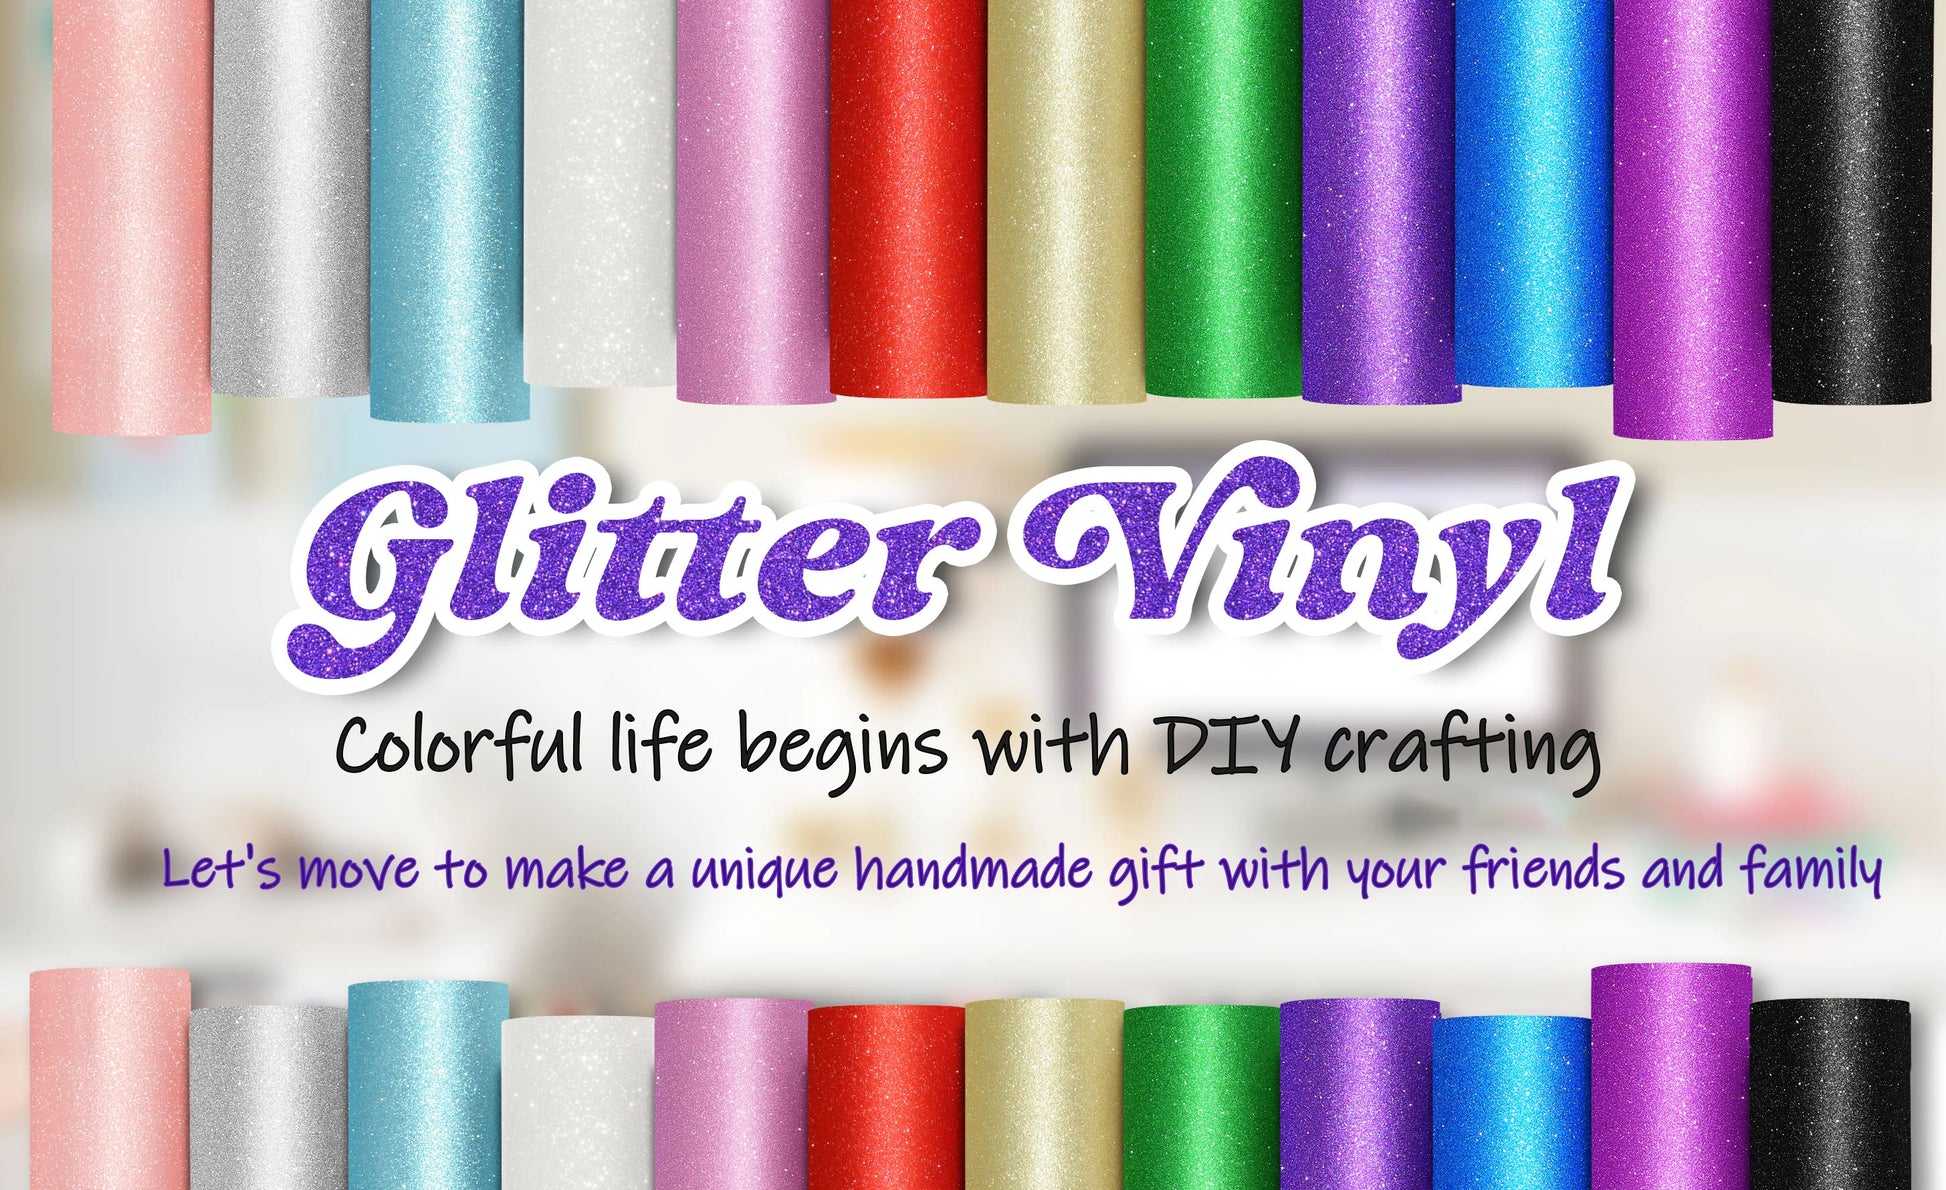 Teckwrap Glitter Adhesive Vinyl - Grape - Cutey K Blanks